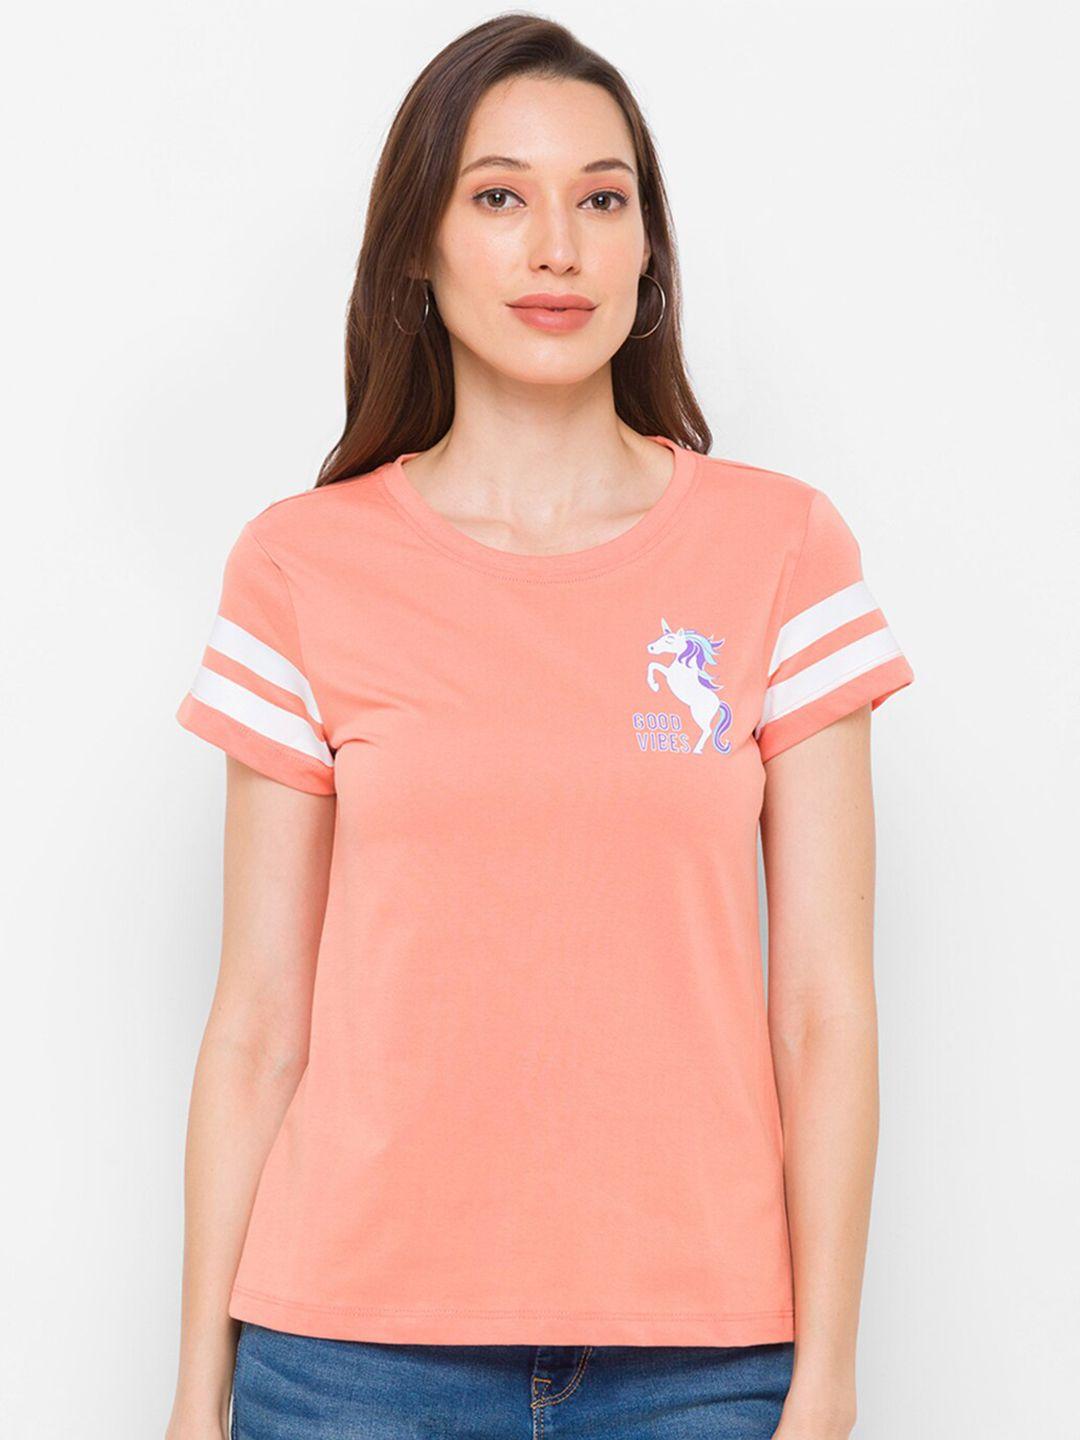 globus-women-pink-pockets-t-shirt